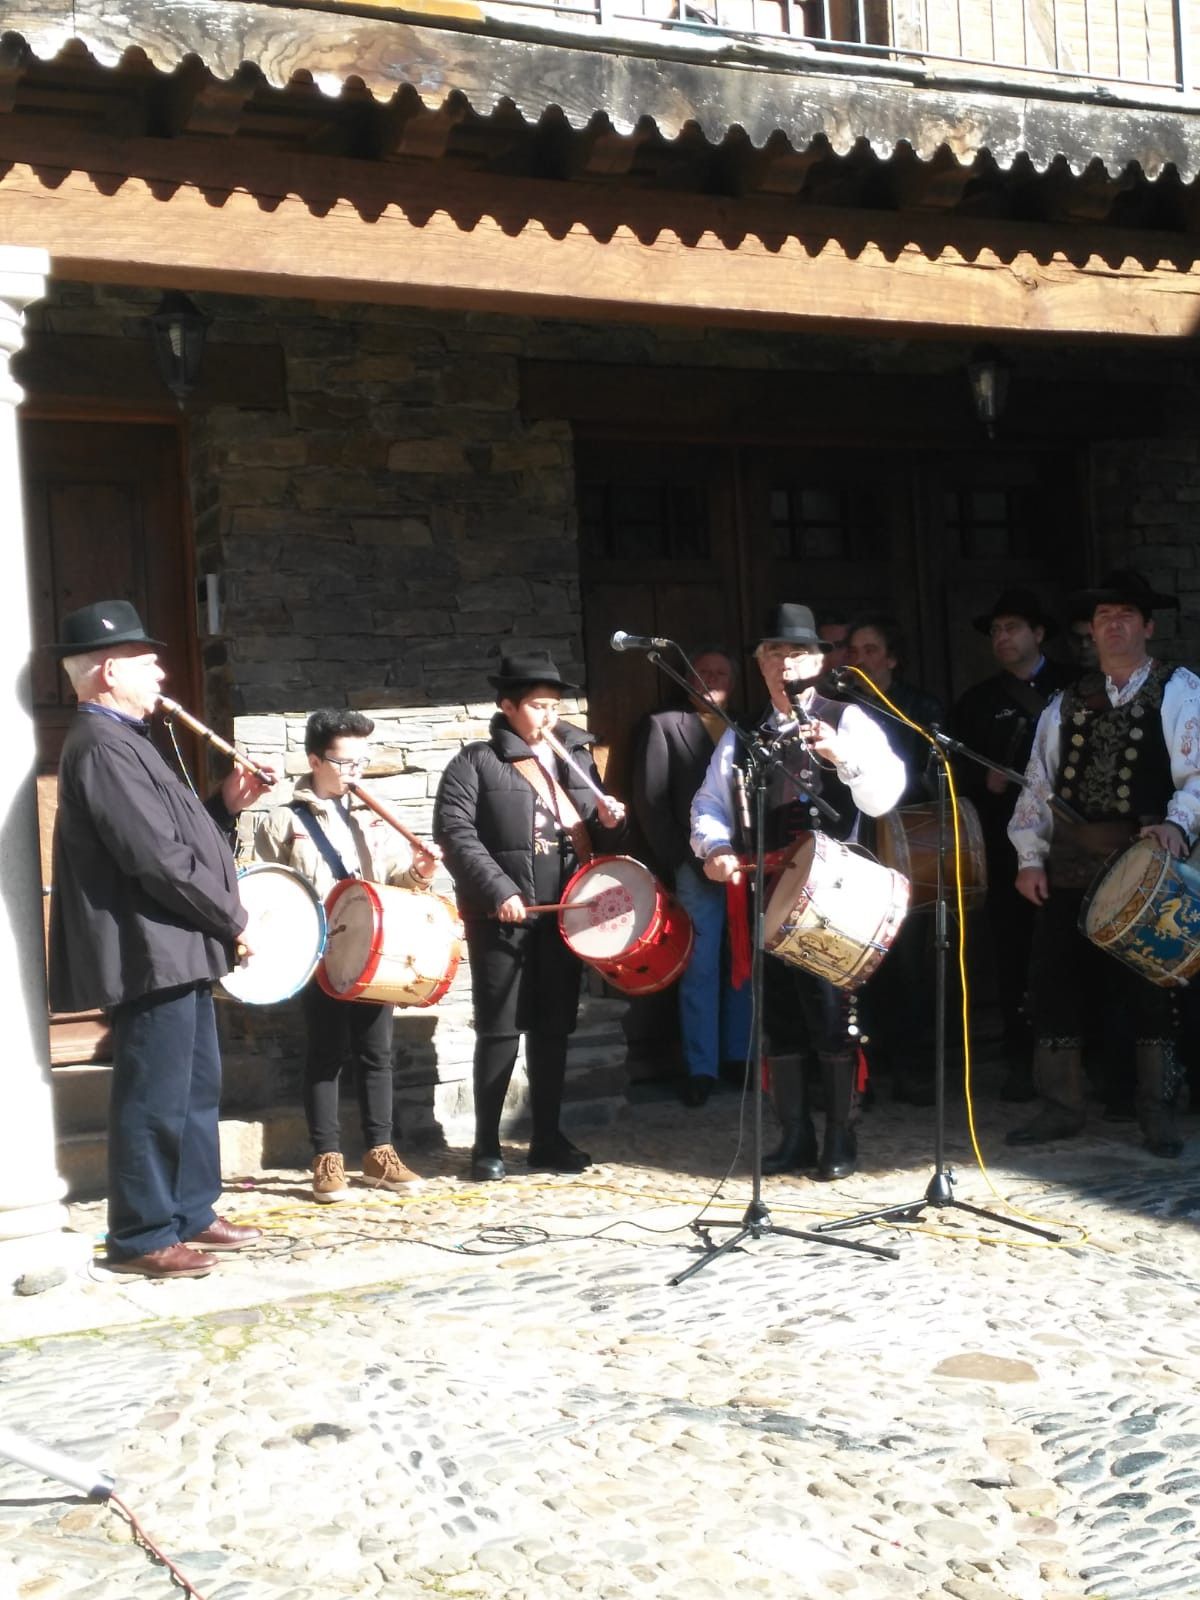  Festival de tamborileros en valero (7) 